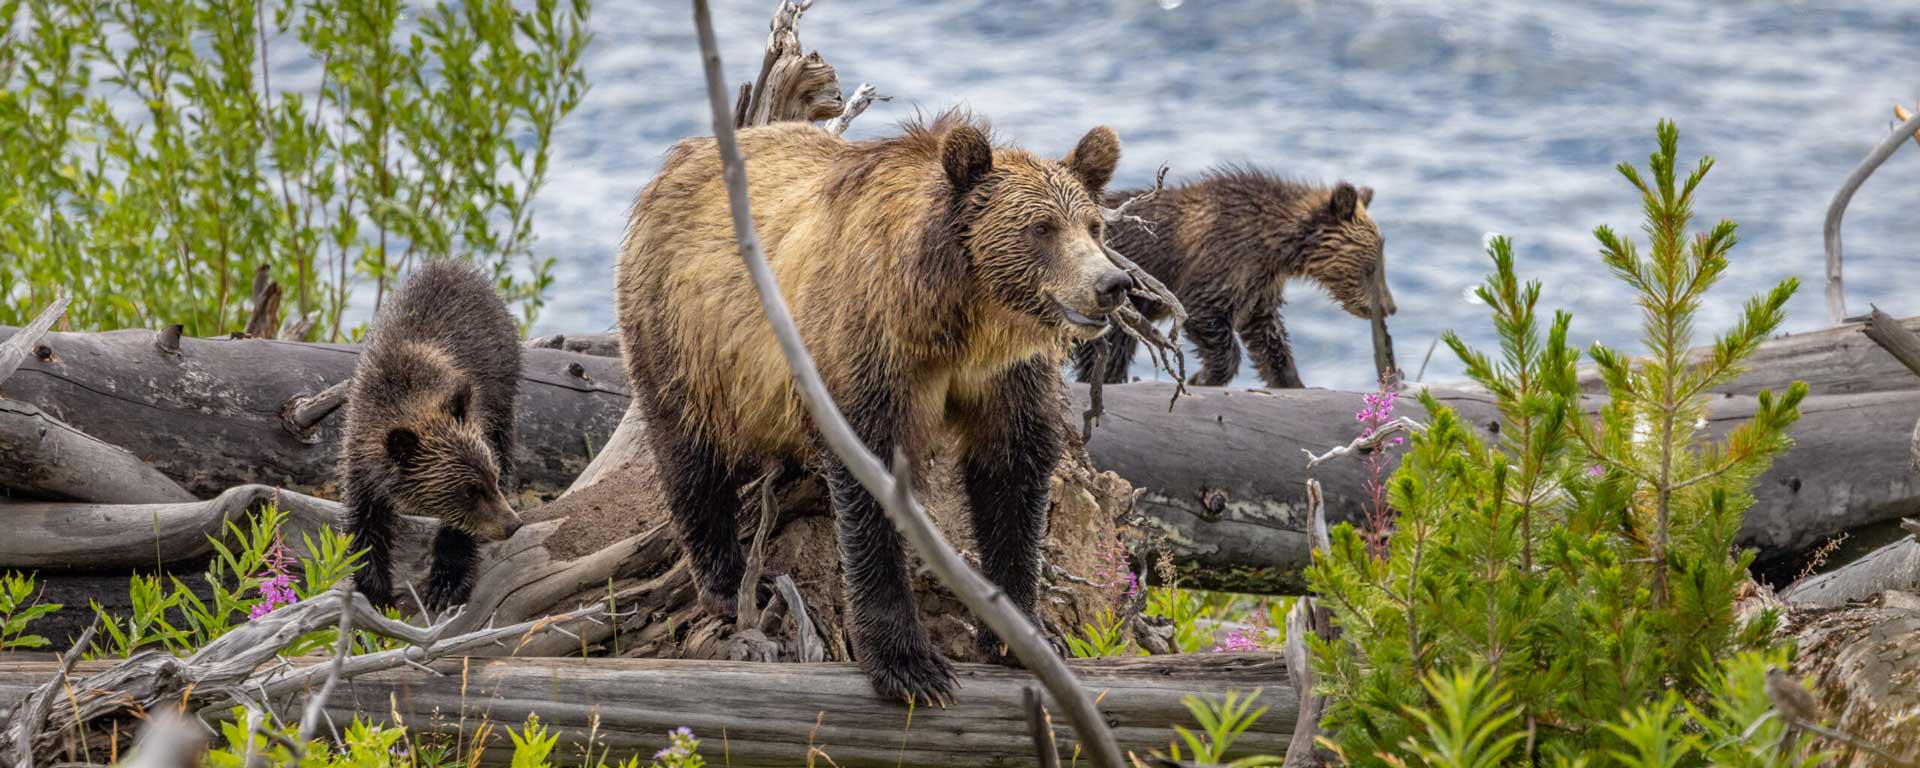 Yellowstone Lake Bears